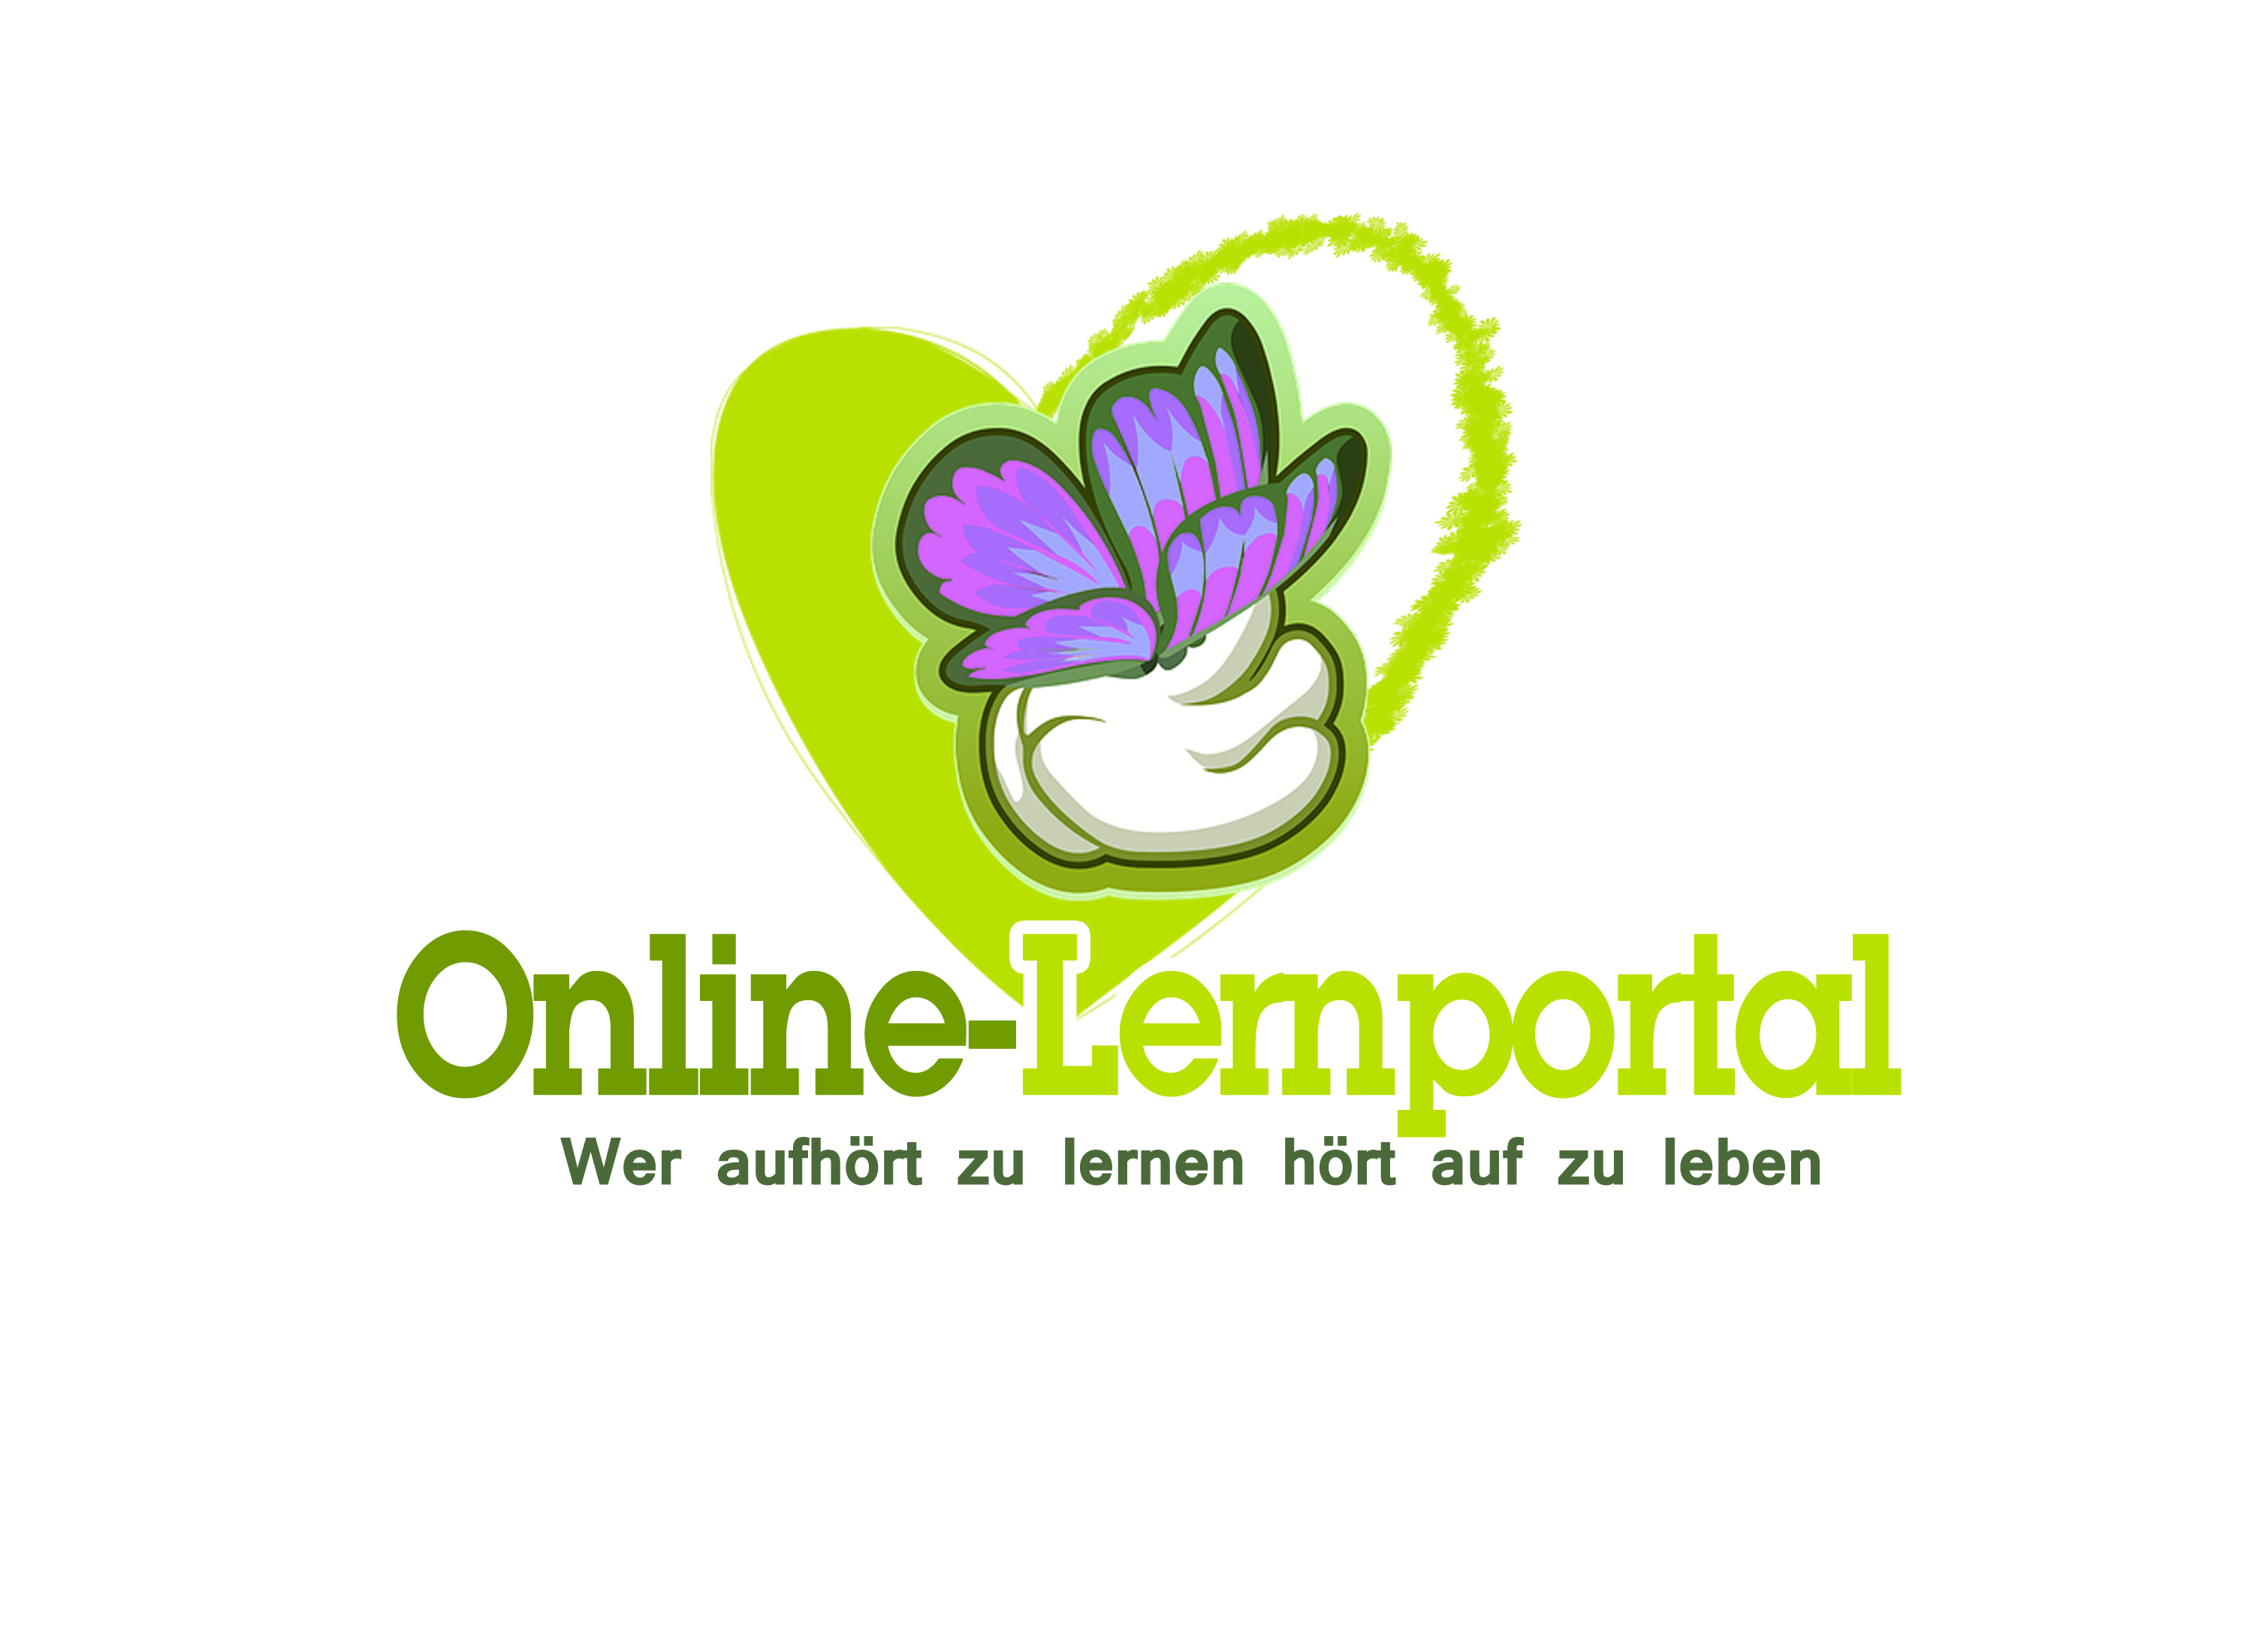 Das Online-Lernportal